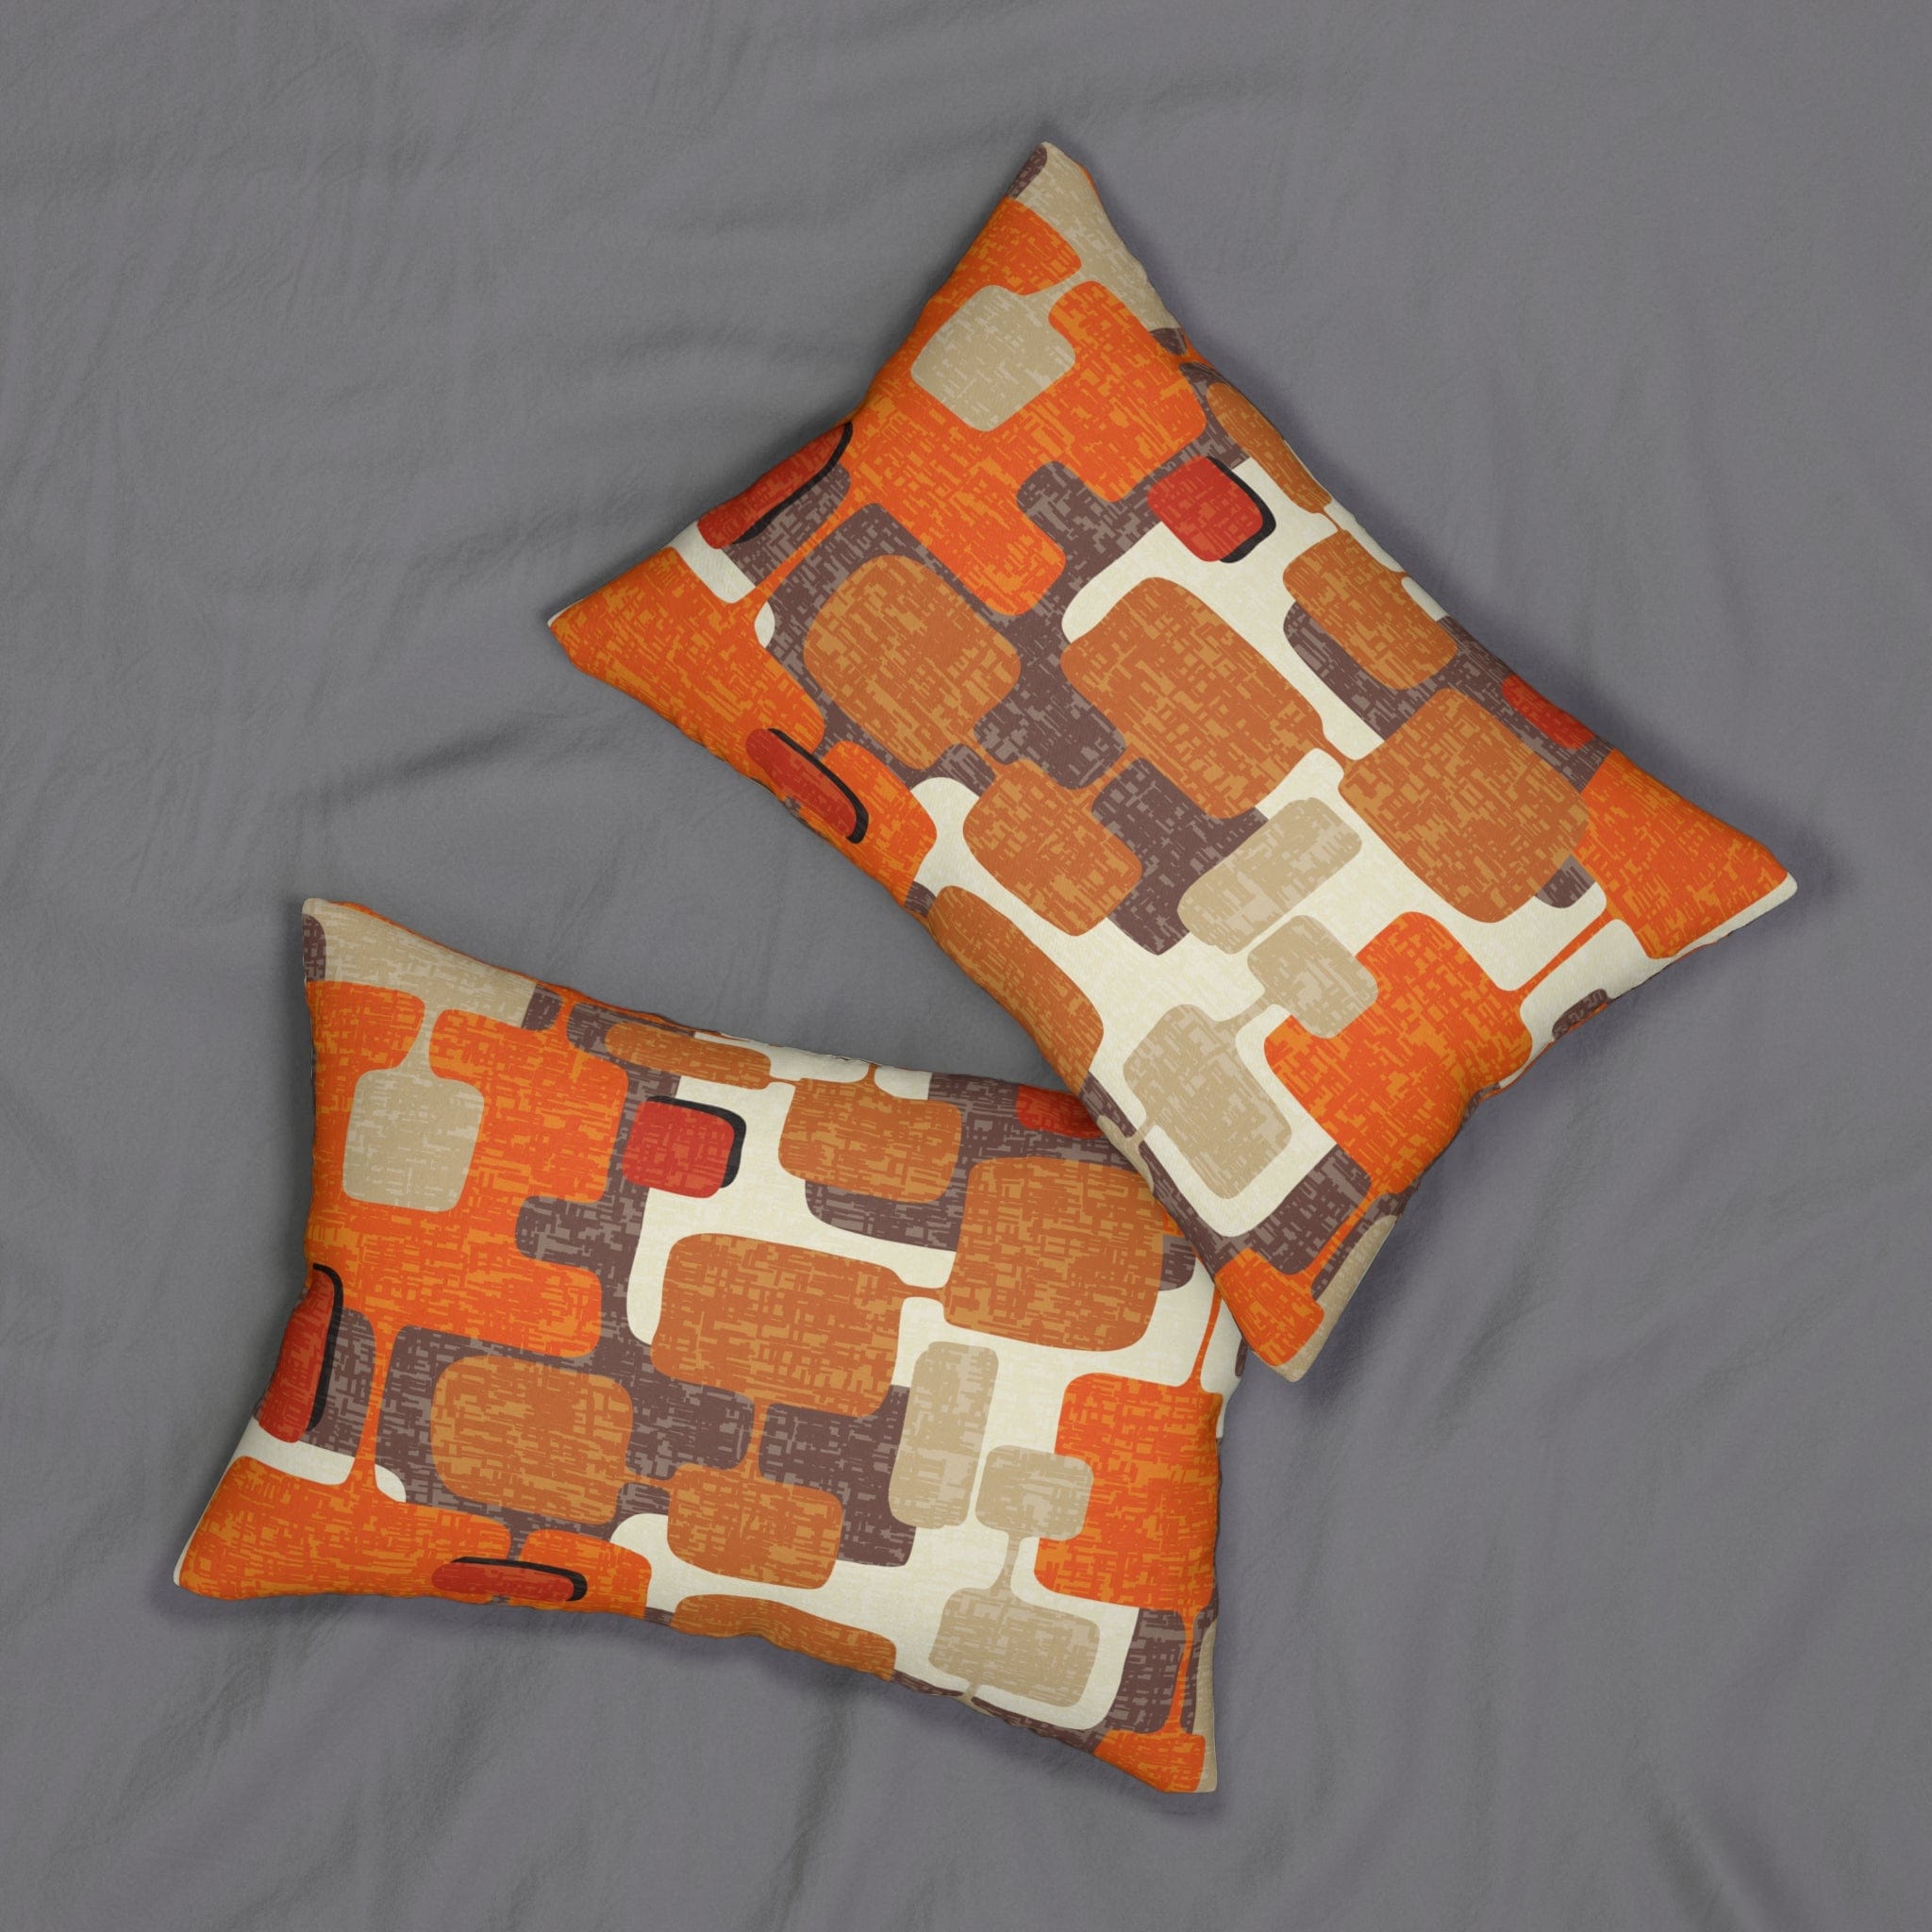 Kate McEnroe New York Retro Geometric Mid Century Modern Lumbar Pillow, Mid Mod Vintage Atomic Age DecorThrow Pillows87044508494276293798